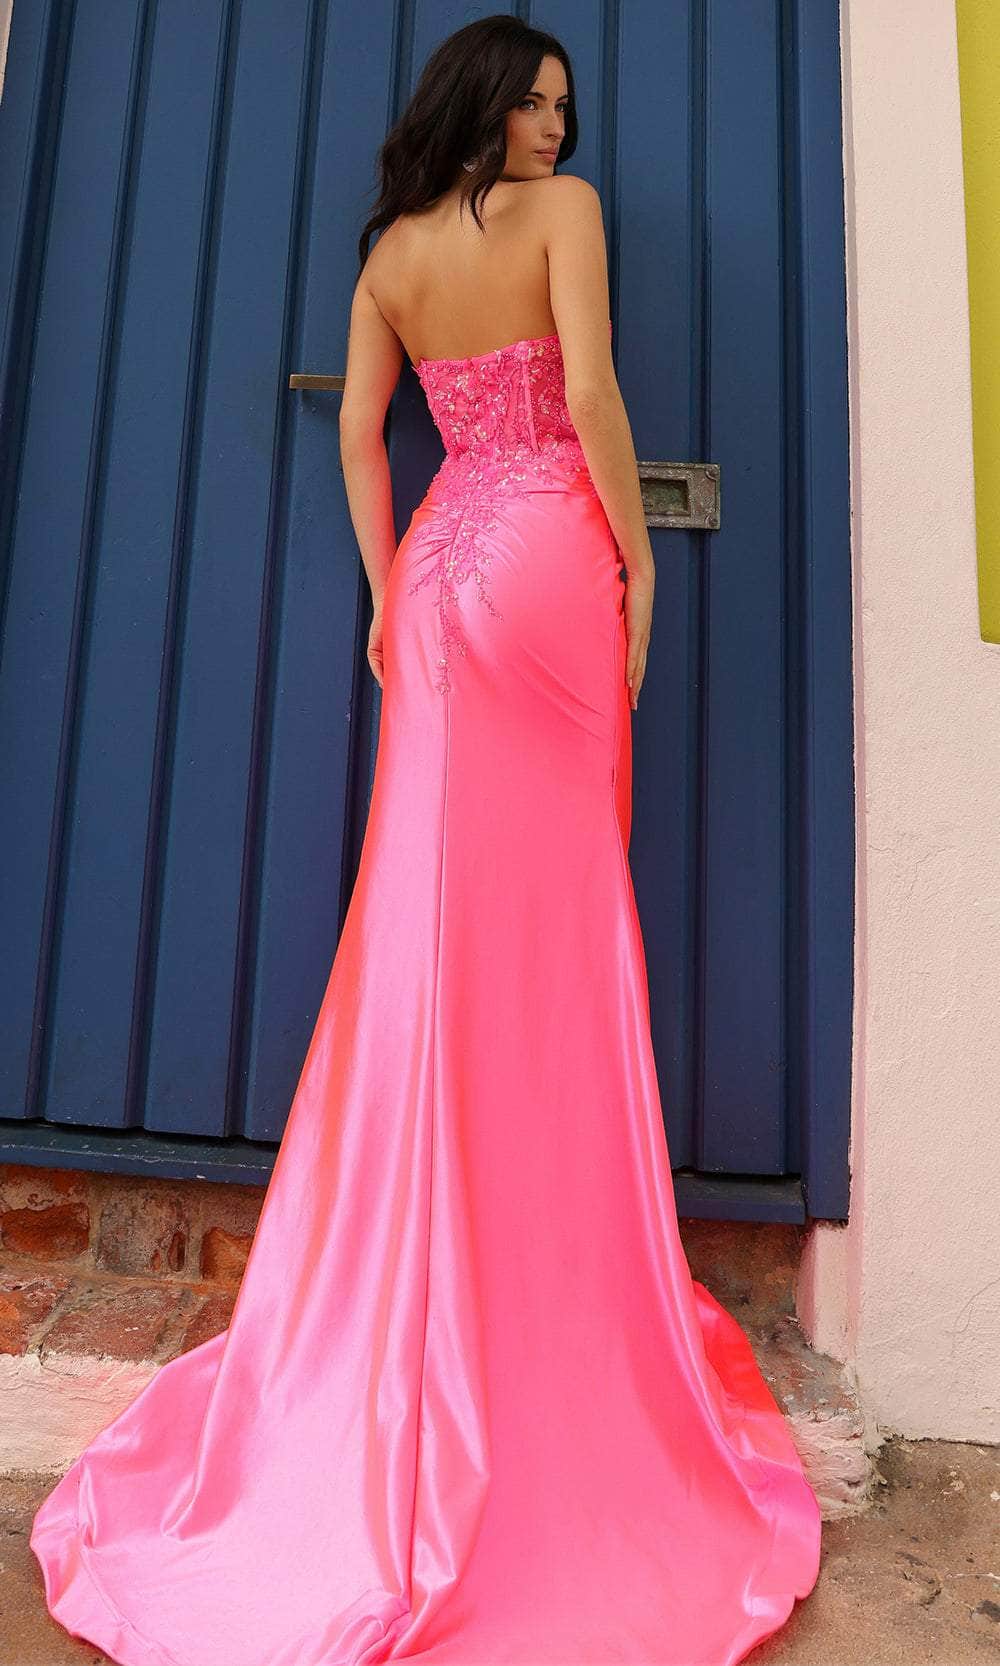 VEGA Neon Pink Lace Corset Bustier Silky Mermaid Formal Dress